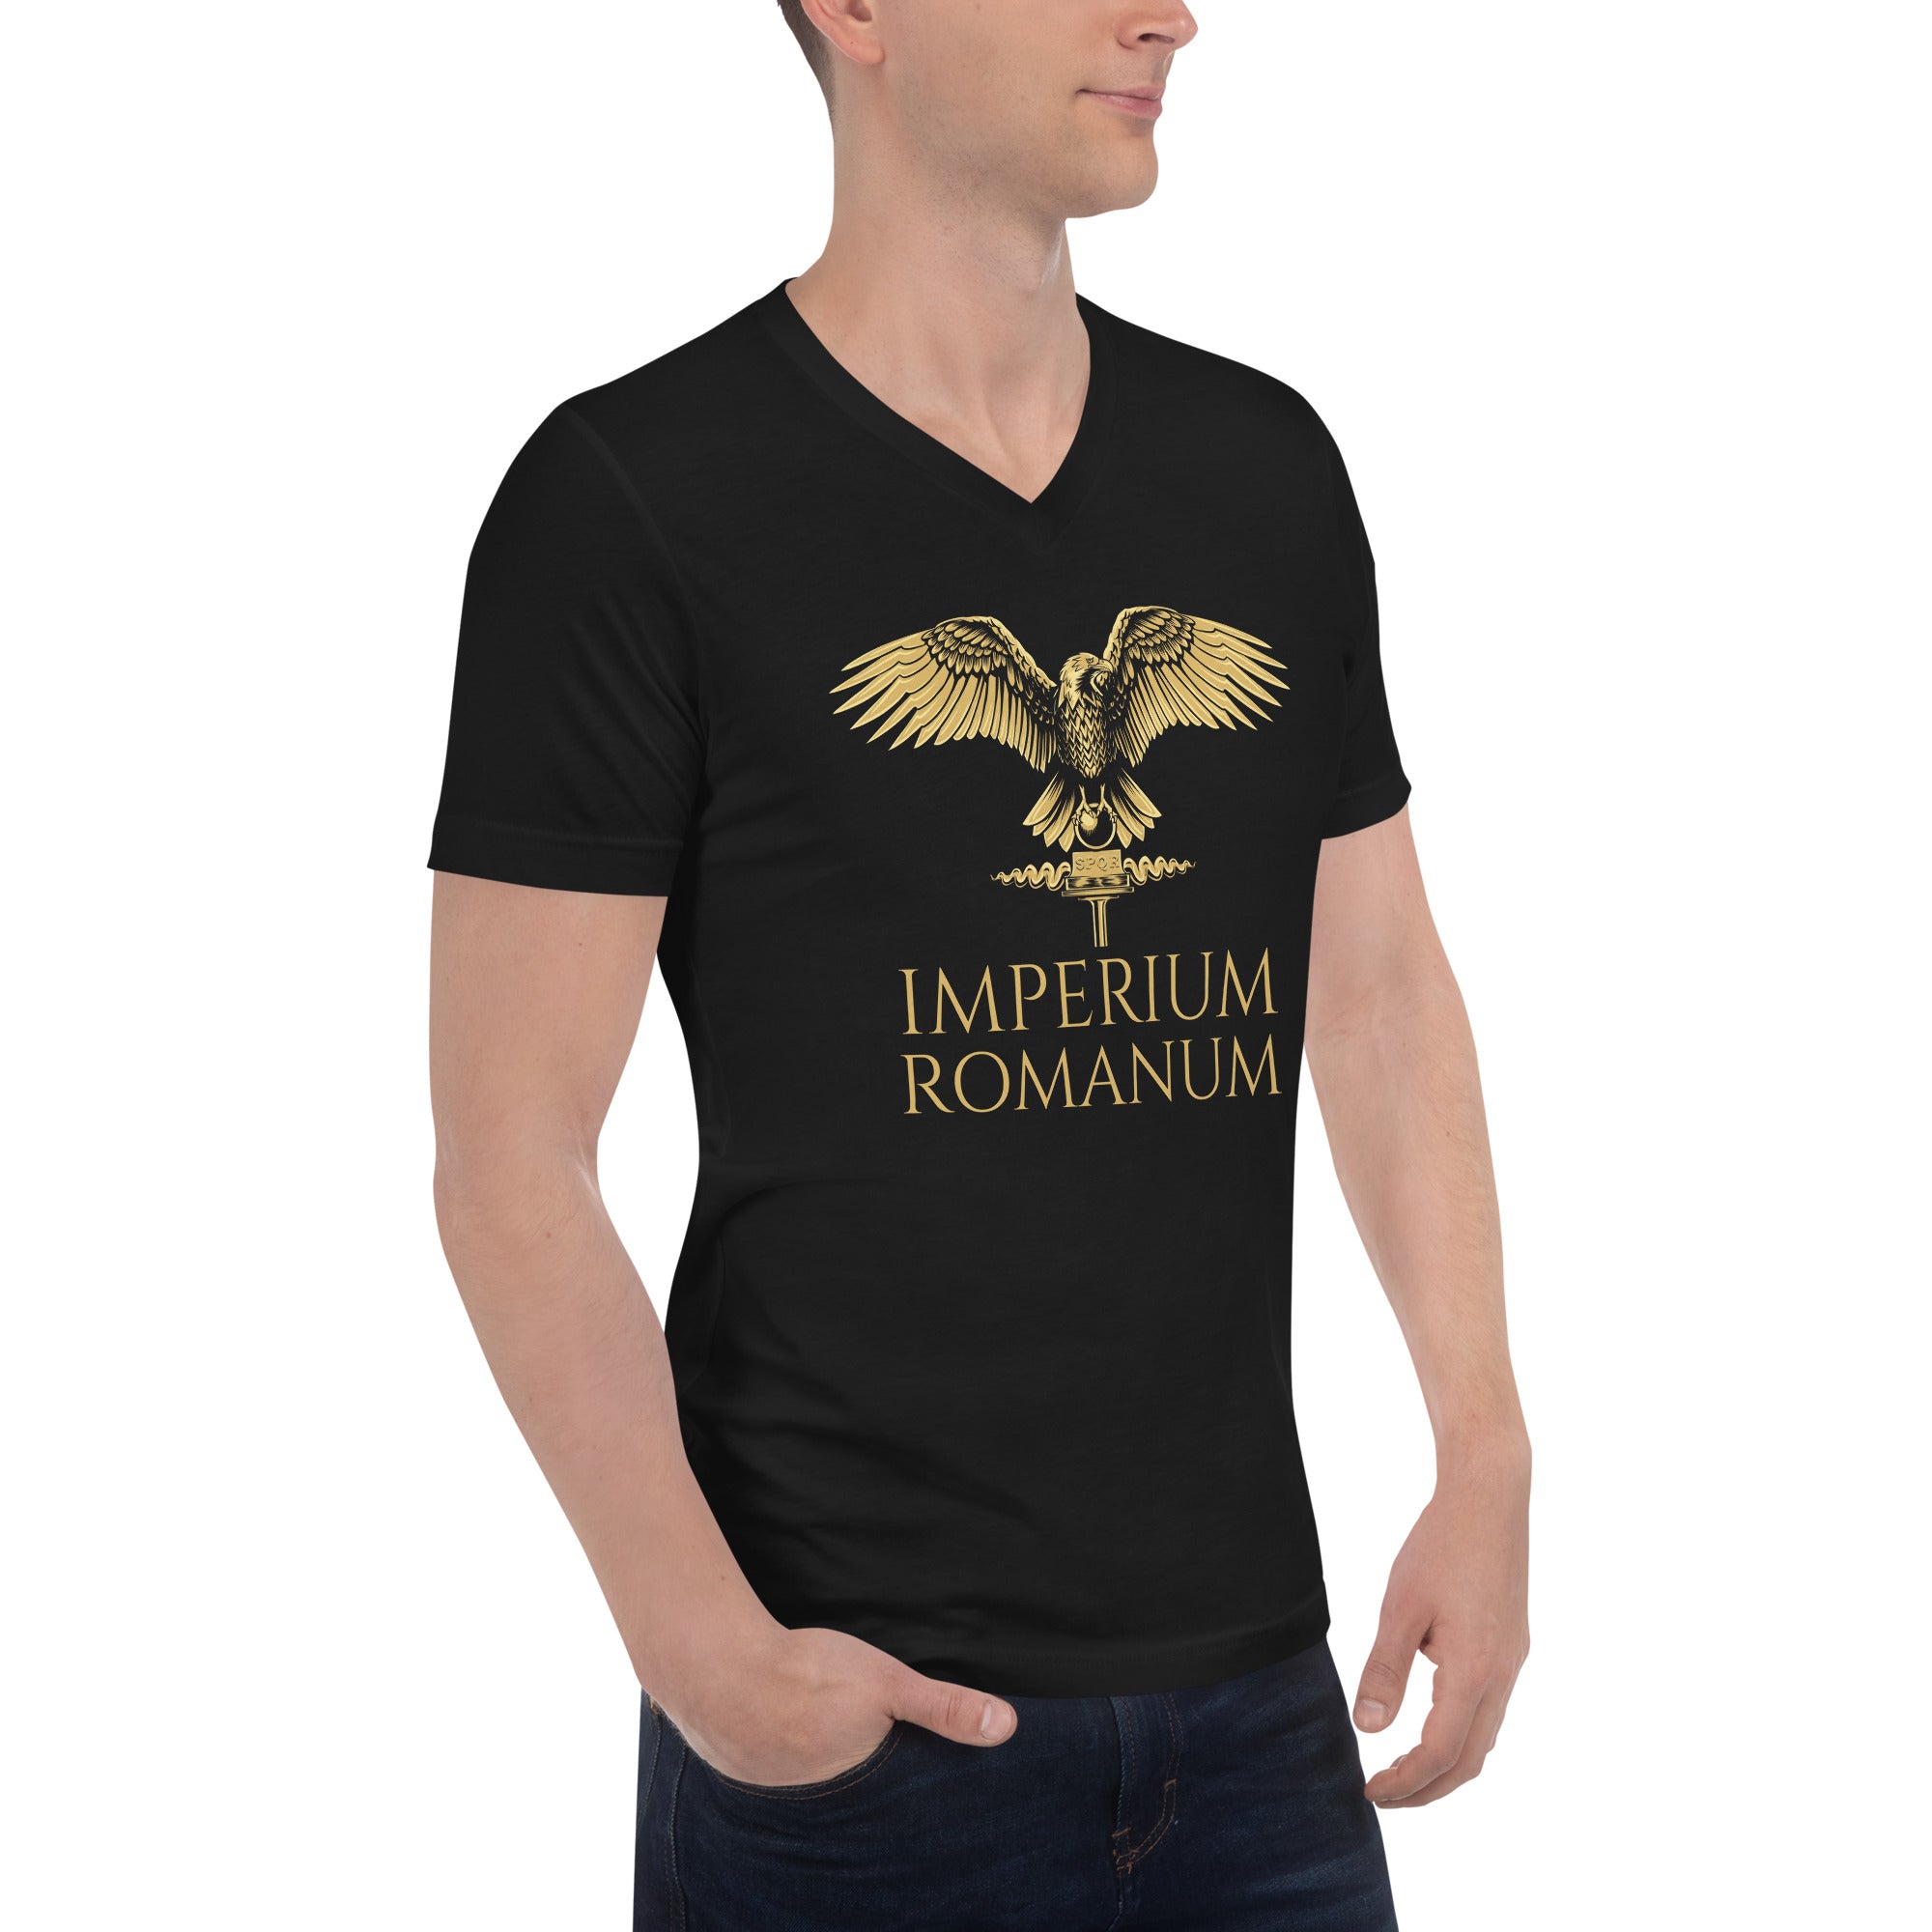 Imperium Romanum - Roman Empire - Ancient Rome - Unisex Short Sleeve V-Neck T-Shirt